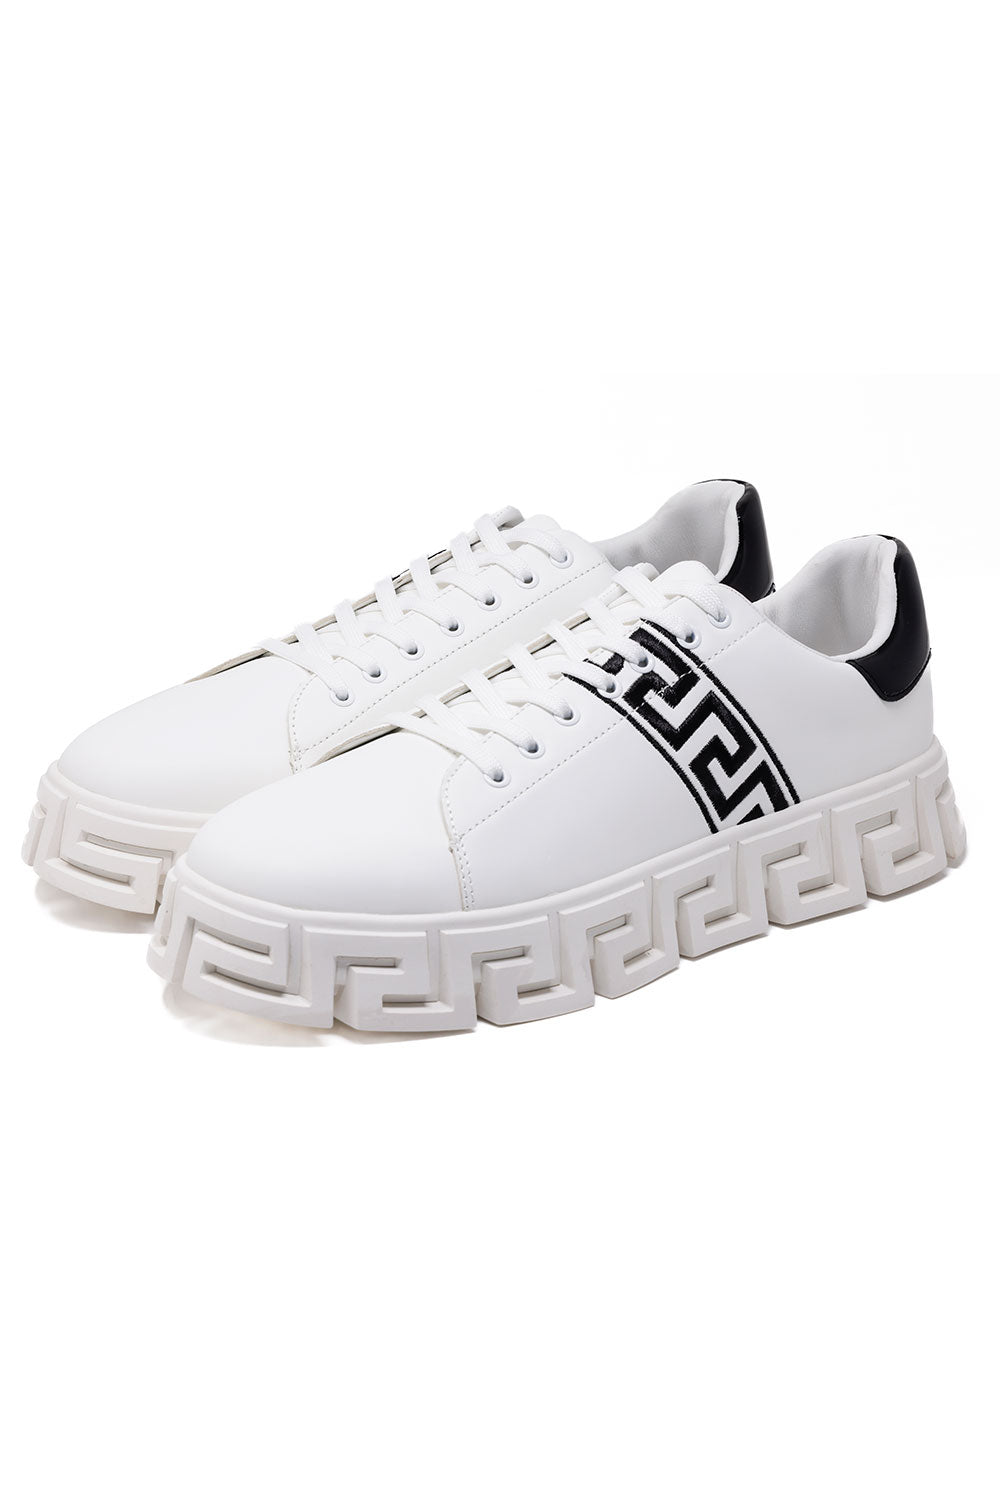 Barabas Men's Greek Key Sole Pattern Premium Sneakers 4SK07 Black White